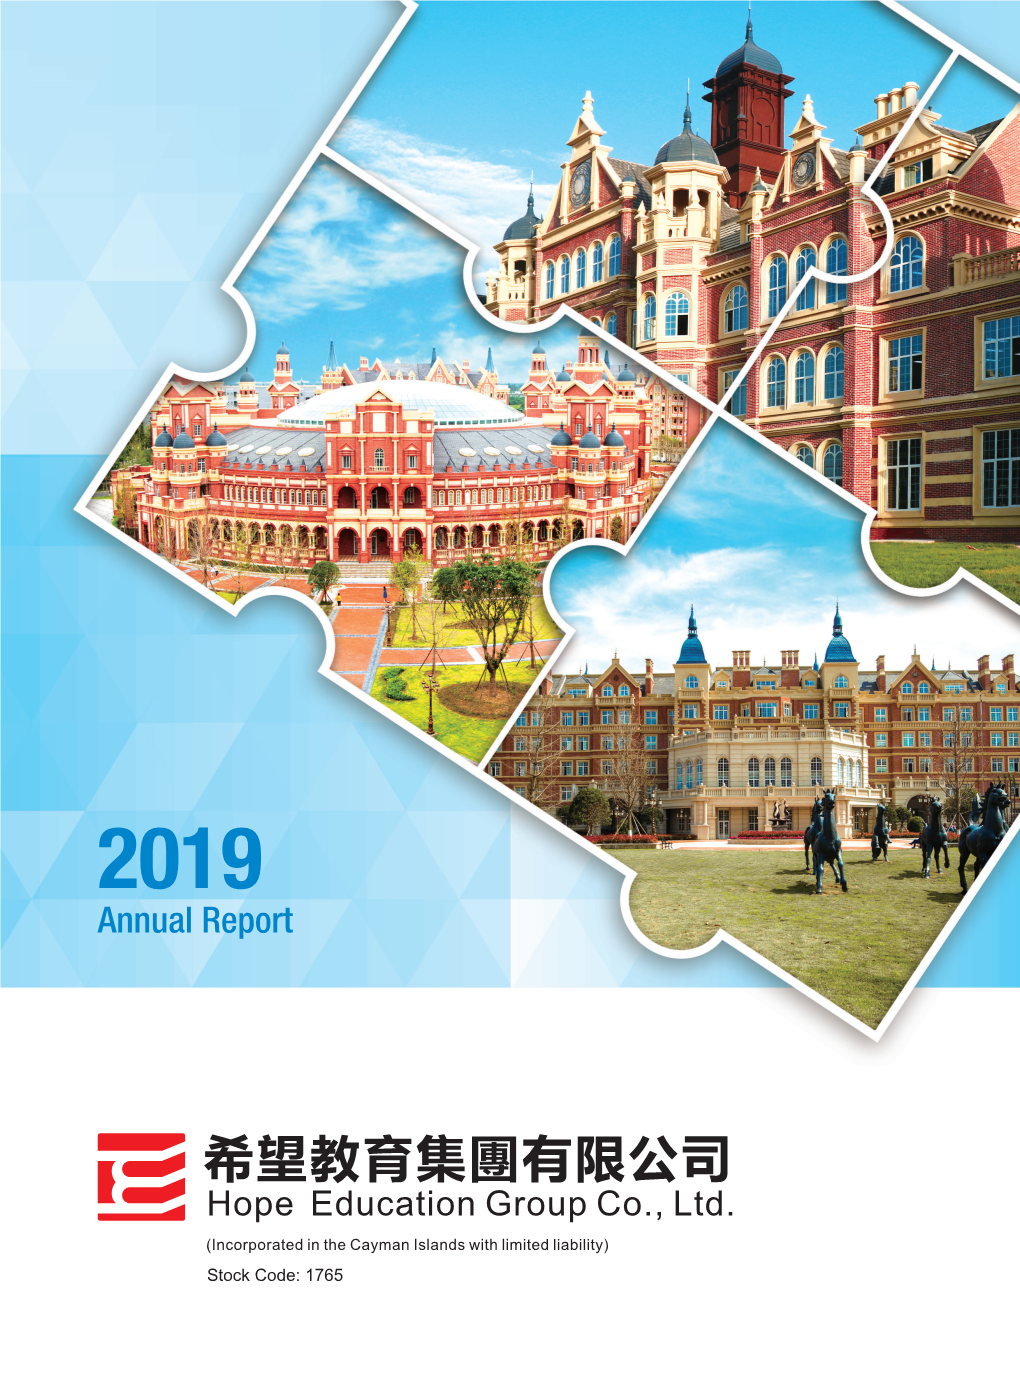 Annual Report 2019Report Annual 年度報告 Contents